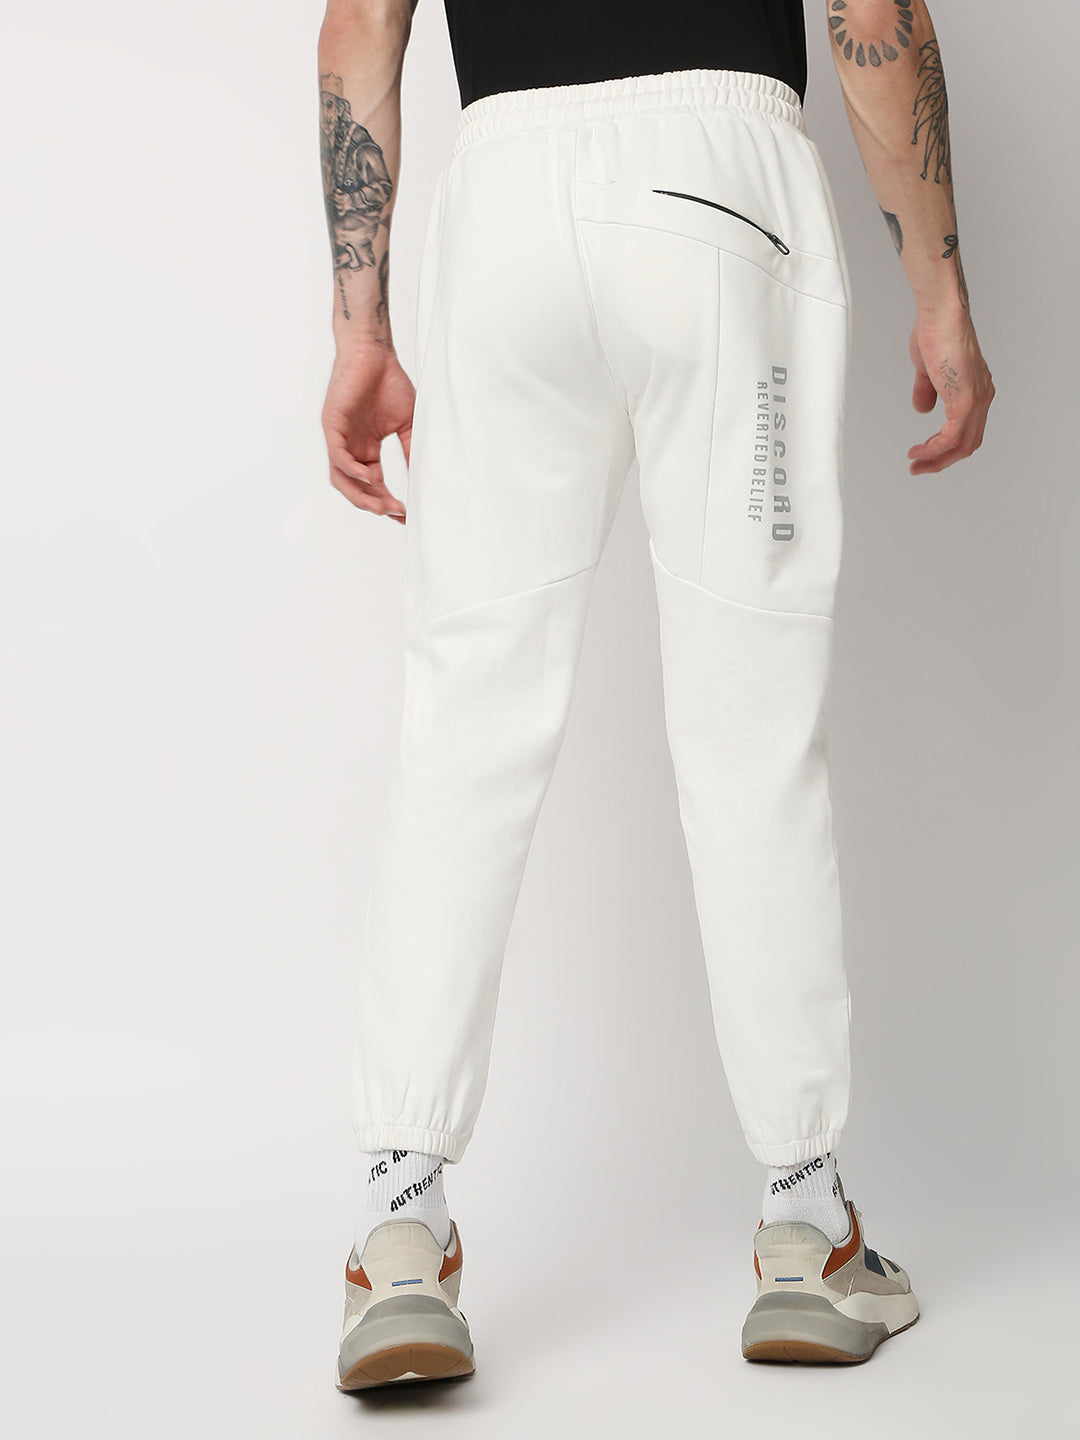 Disrupt Mens White Cut-Sew Printed Self-Design Comfort Fit Jogger